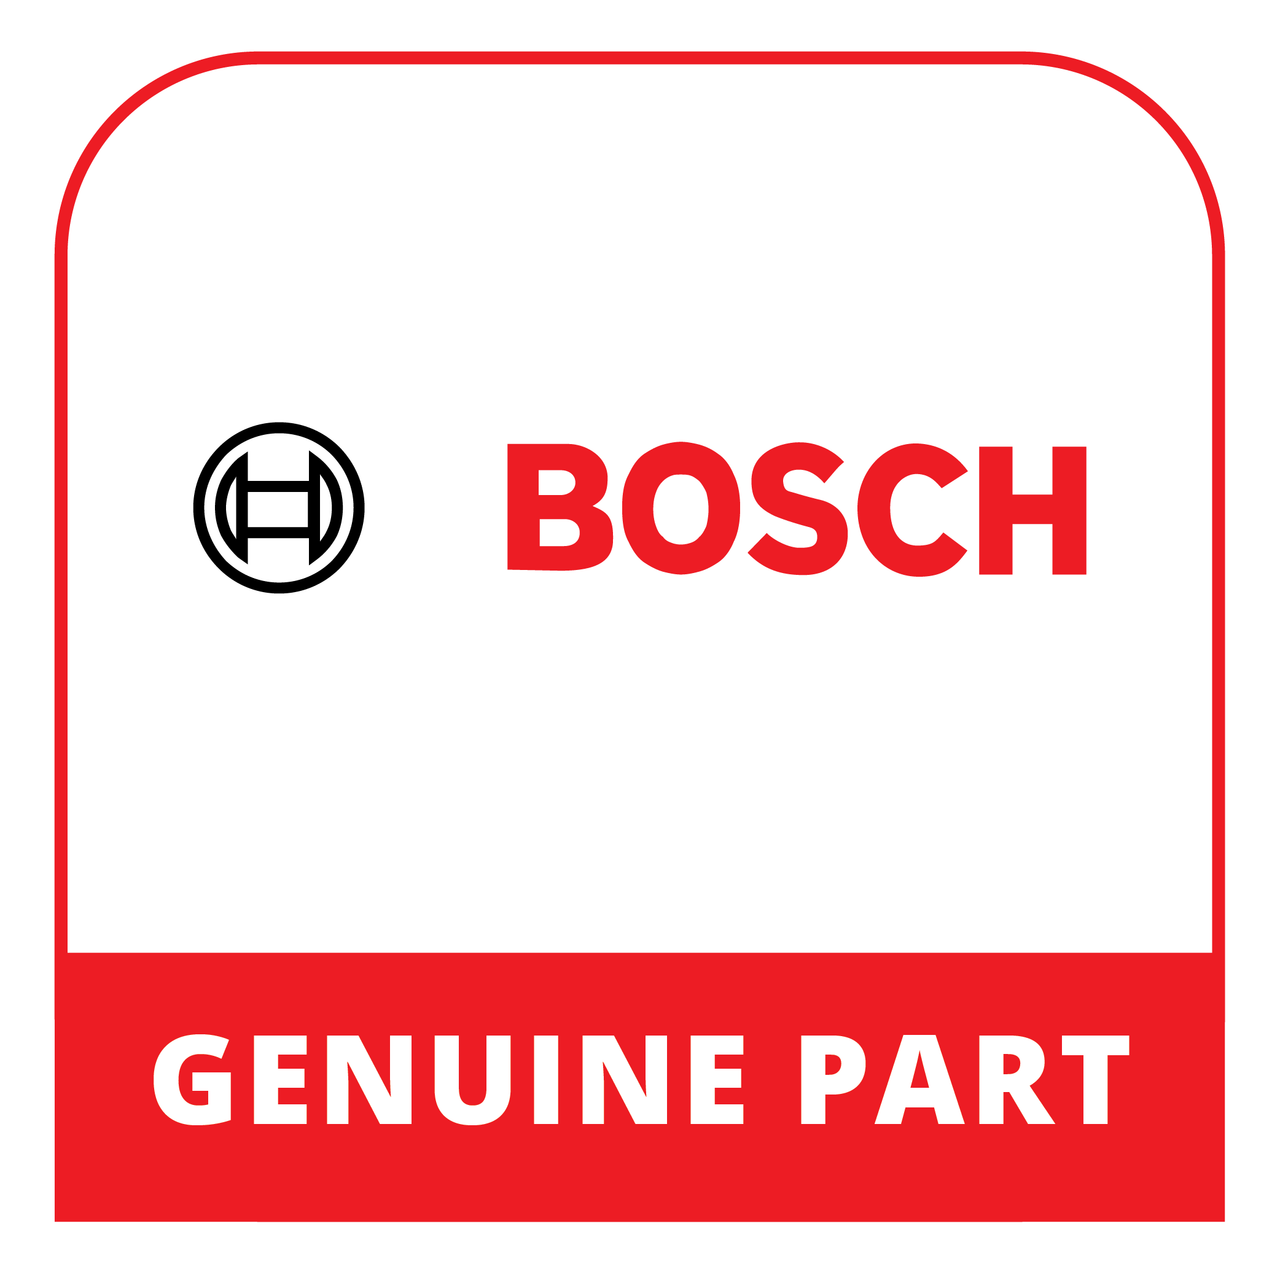 Bosch (Thermador) 20001955 - Hob Top - Genuine Bosch (Thermador) Part